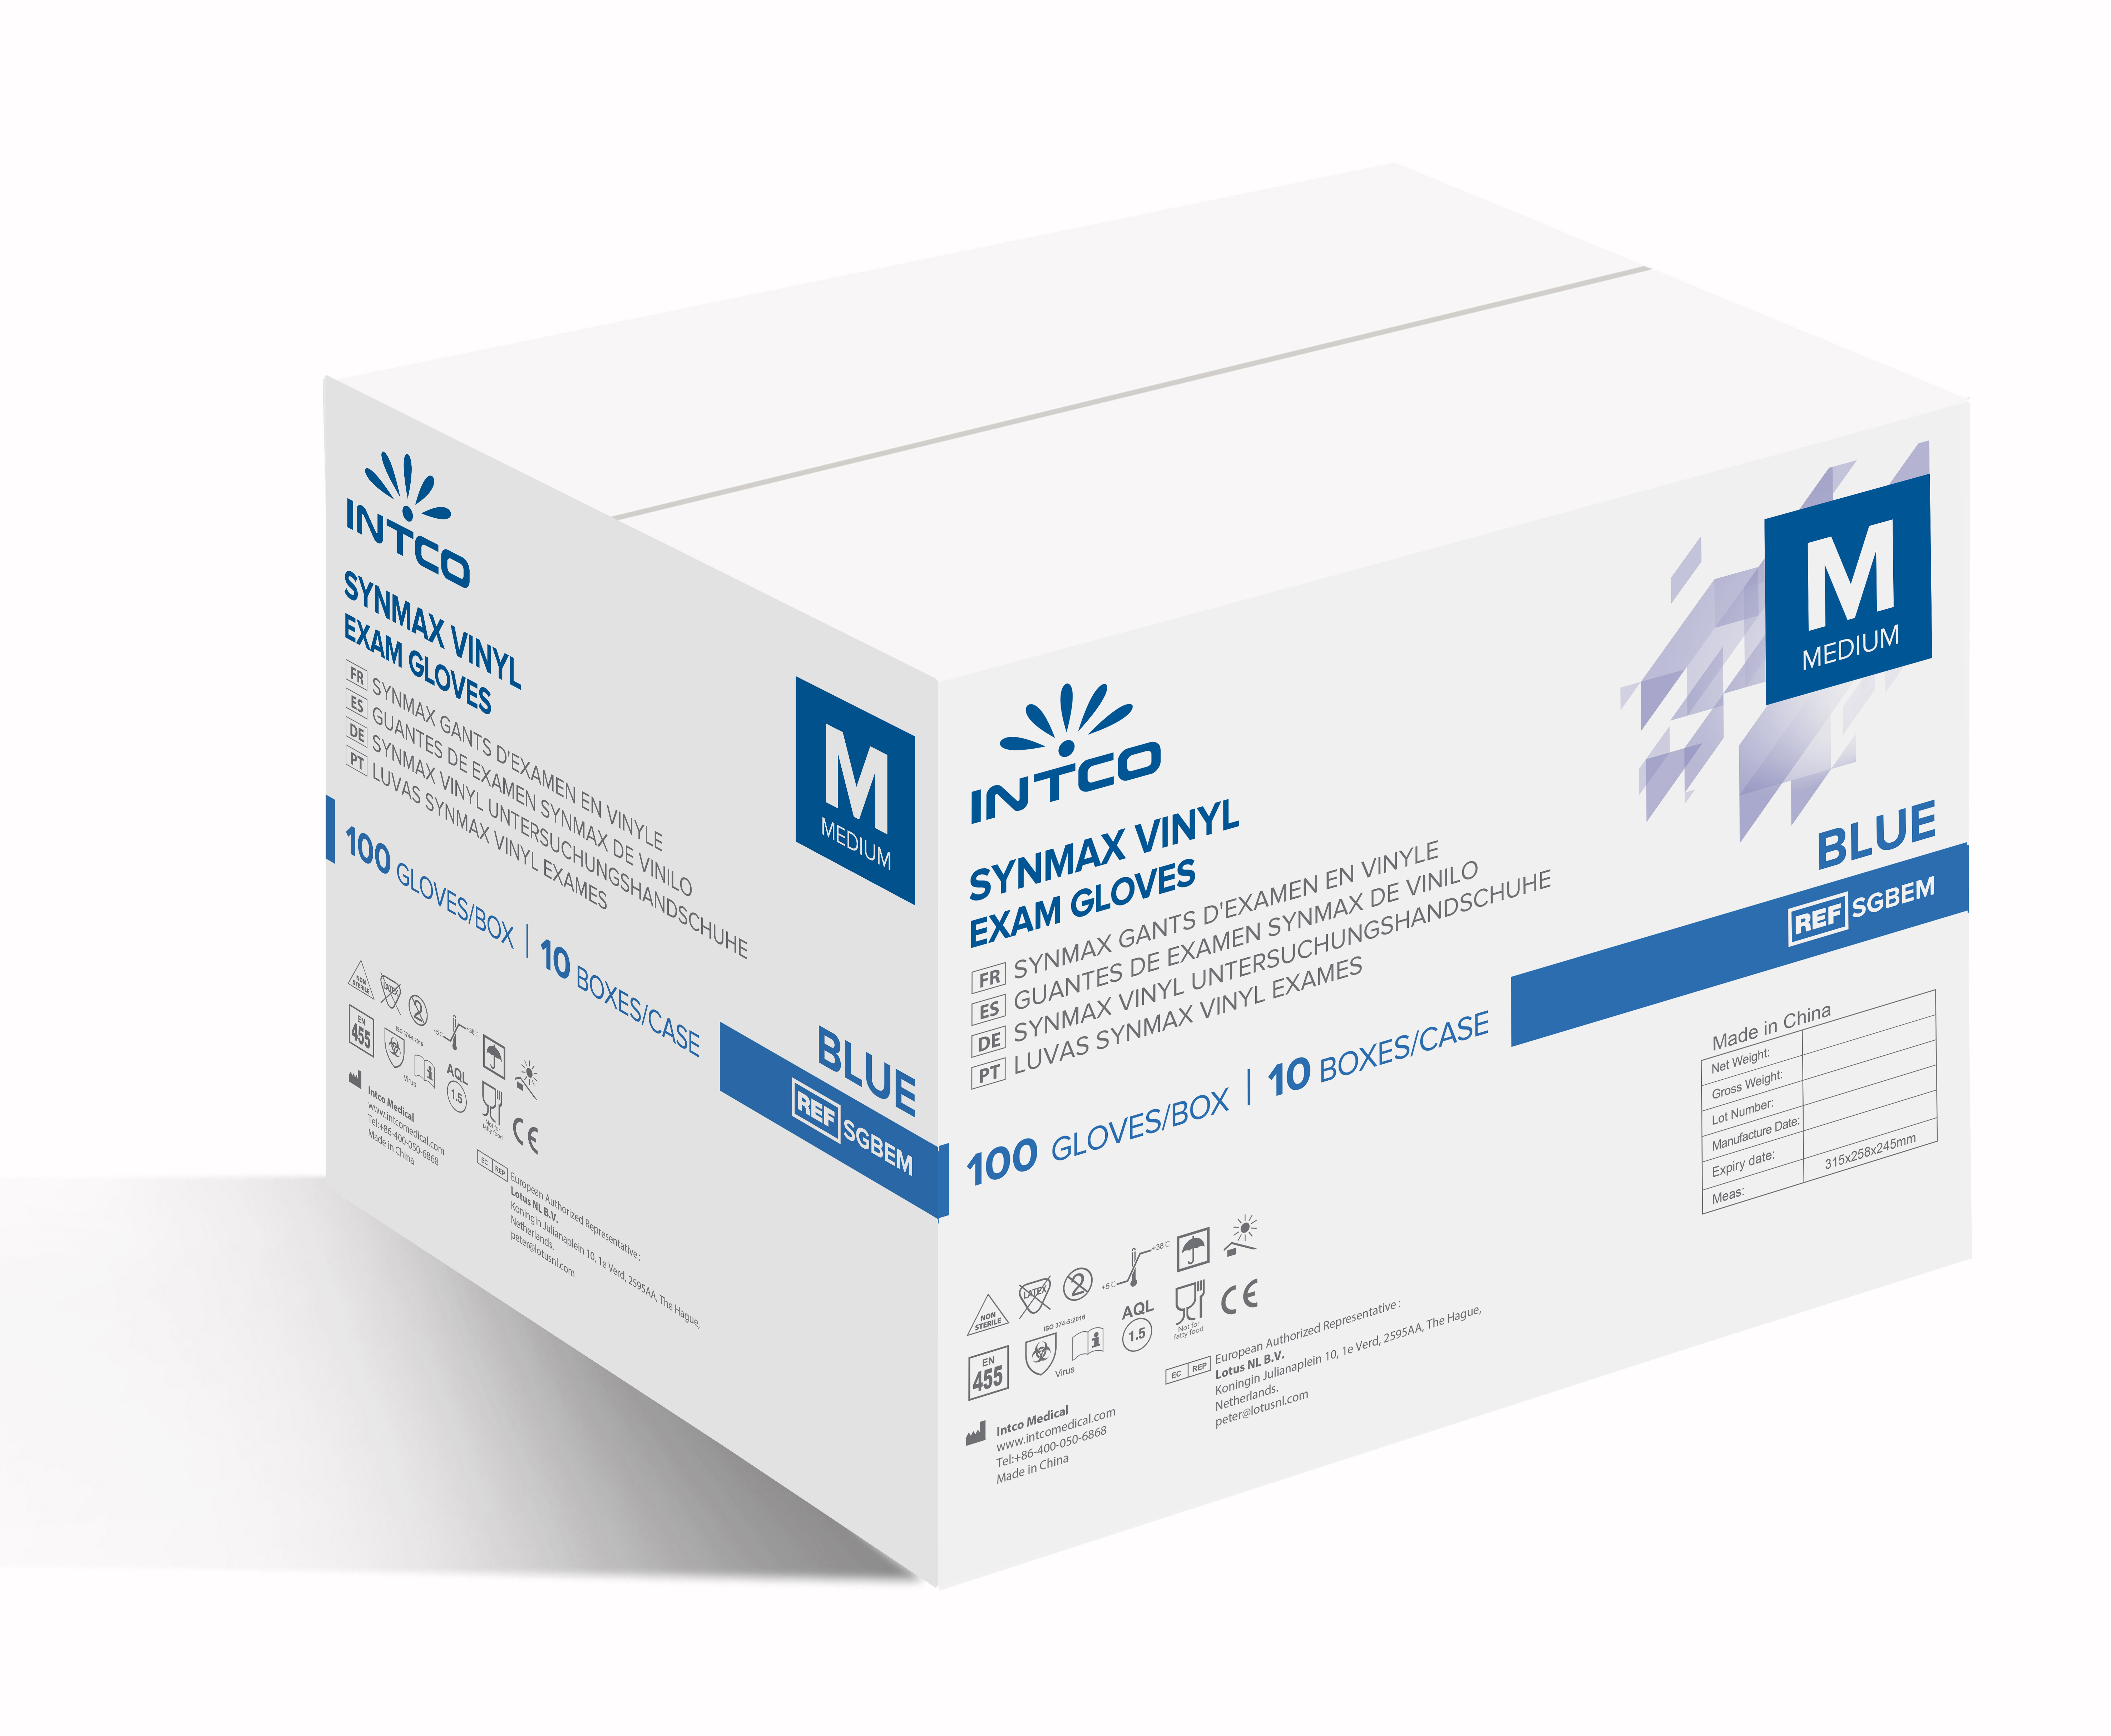 Intco Synmax medizinische Einmalhandschuhe blau - 100 Stk je Box, puderfrei / CE & FDA zertifiziert